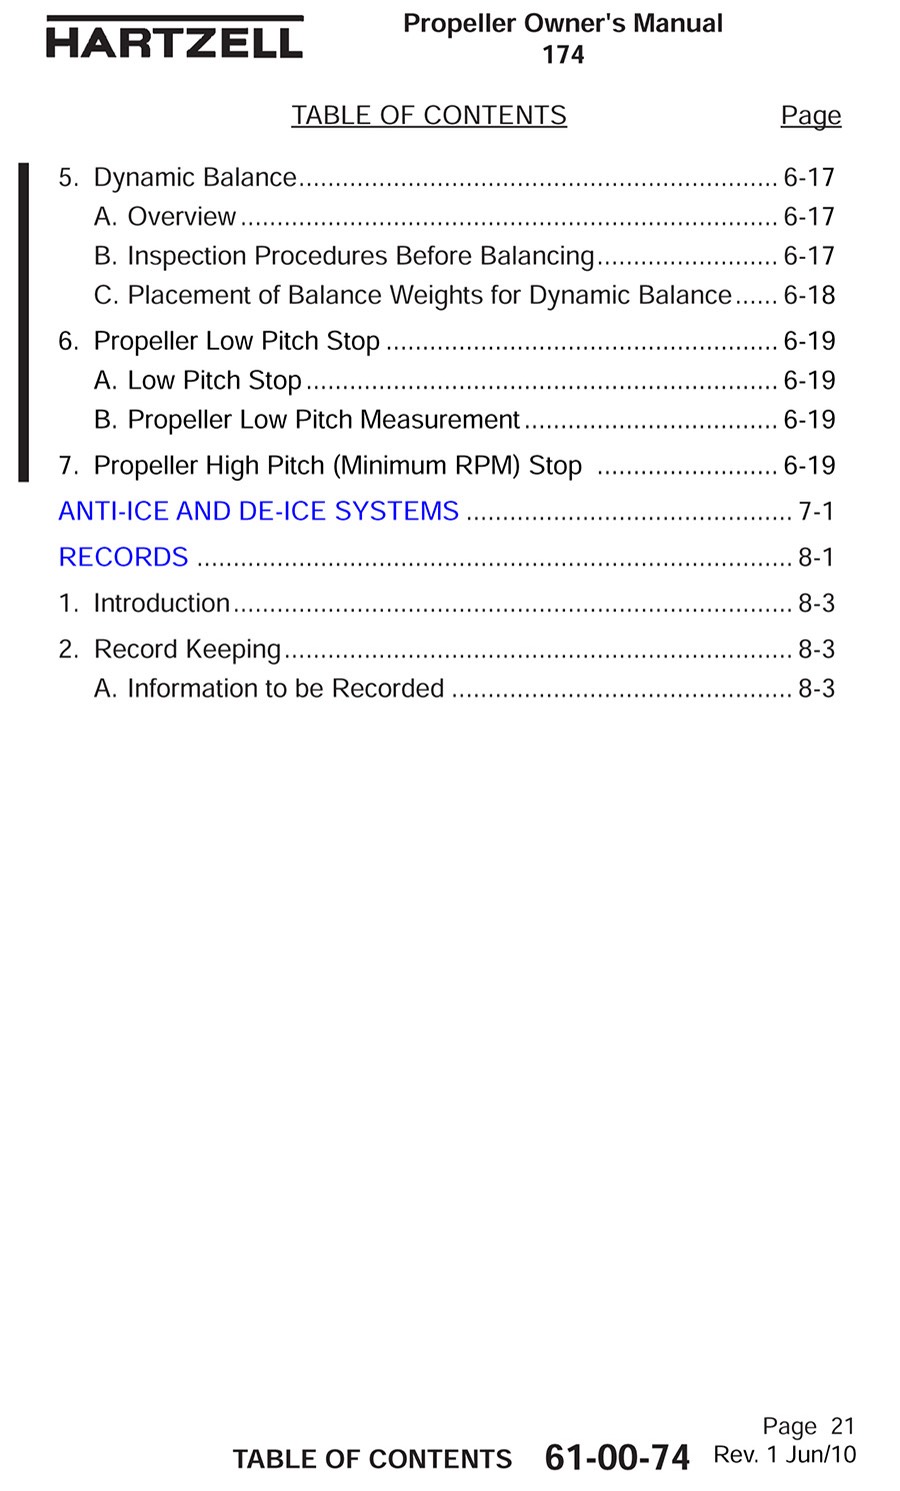 Hartzell Prop Manual 2010 page23